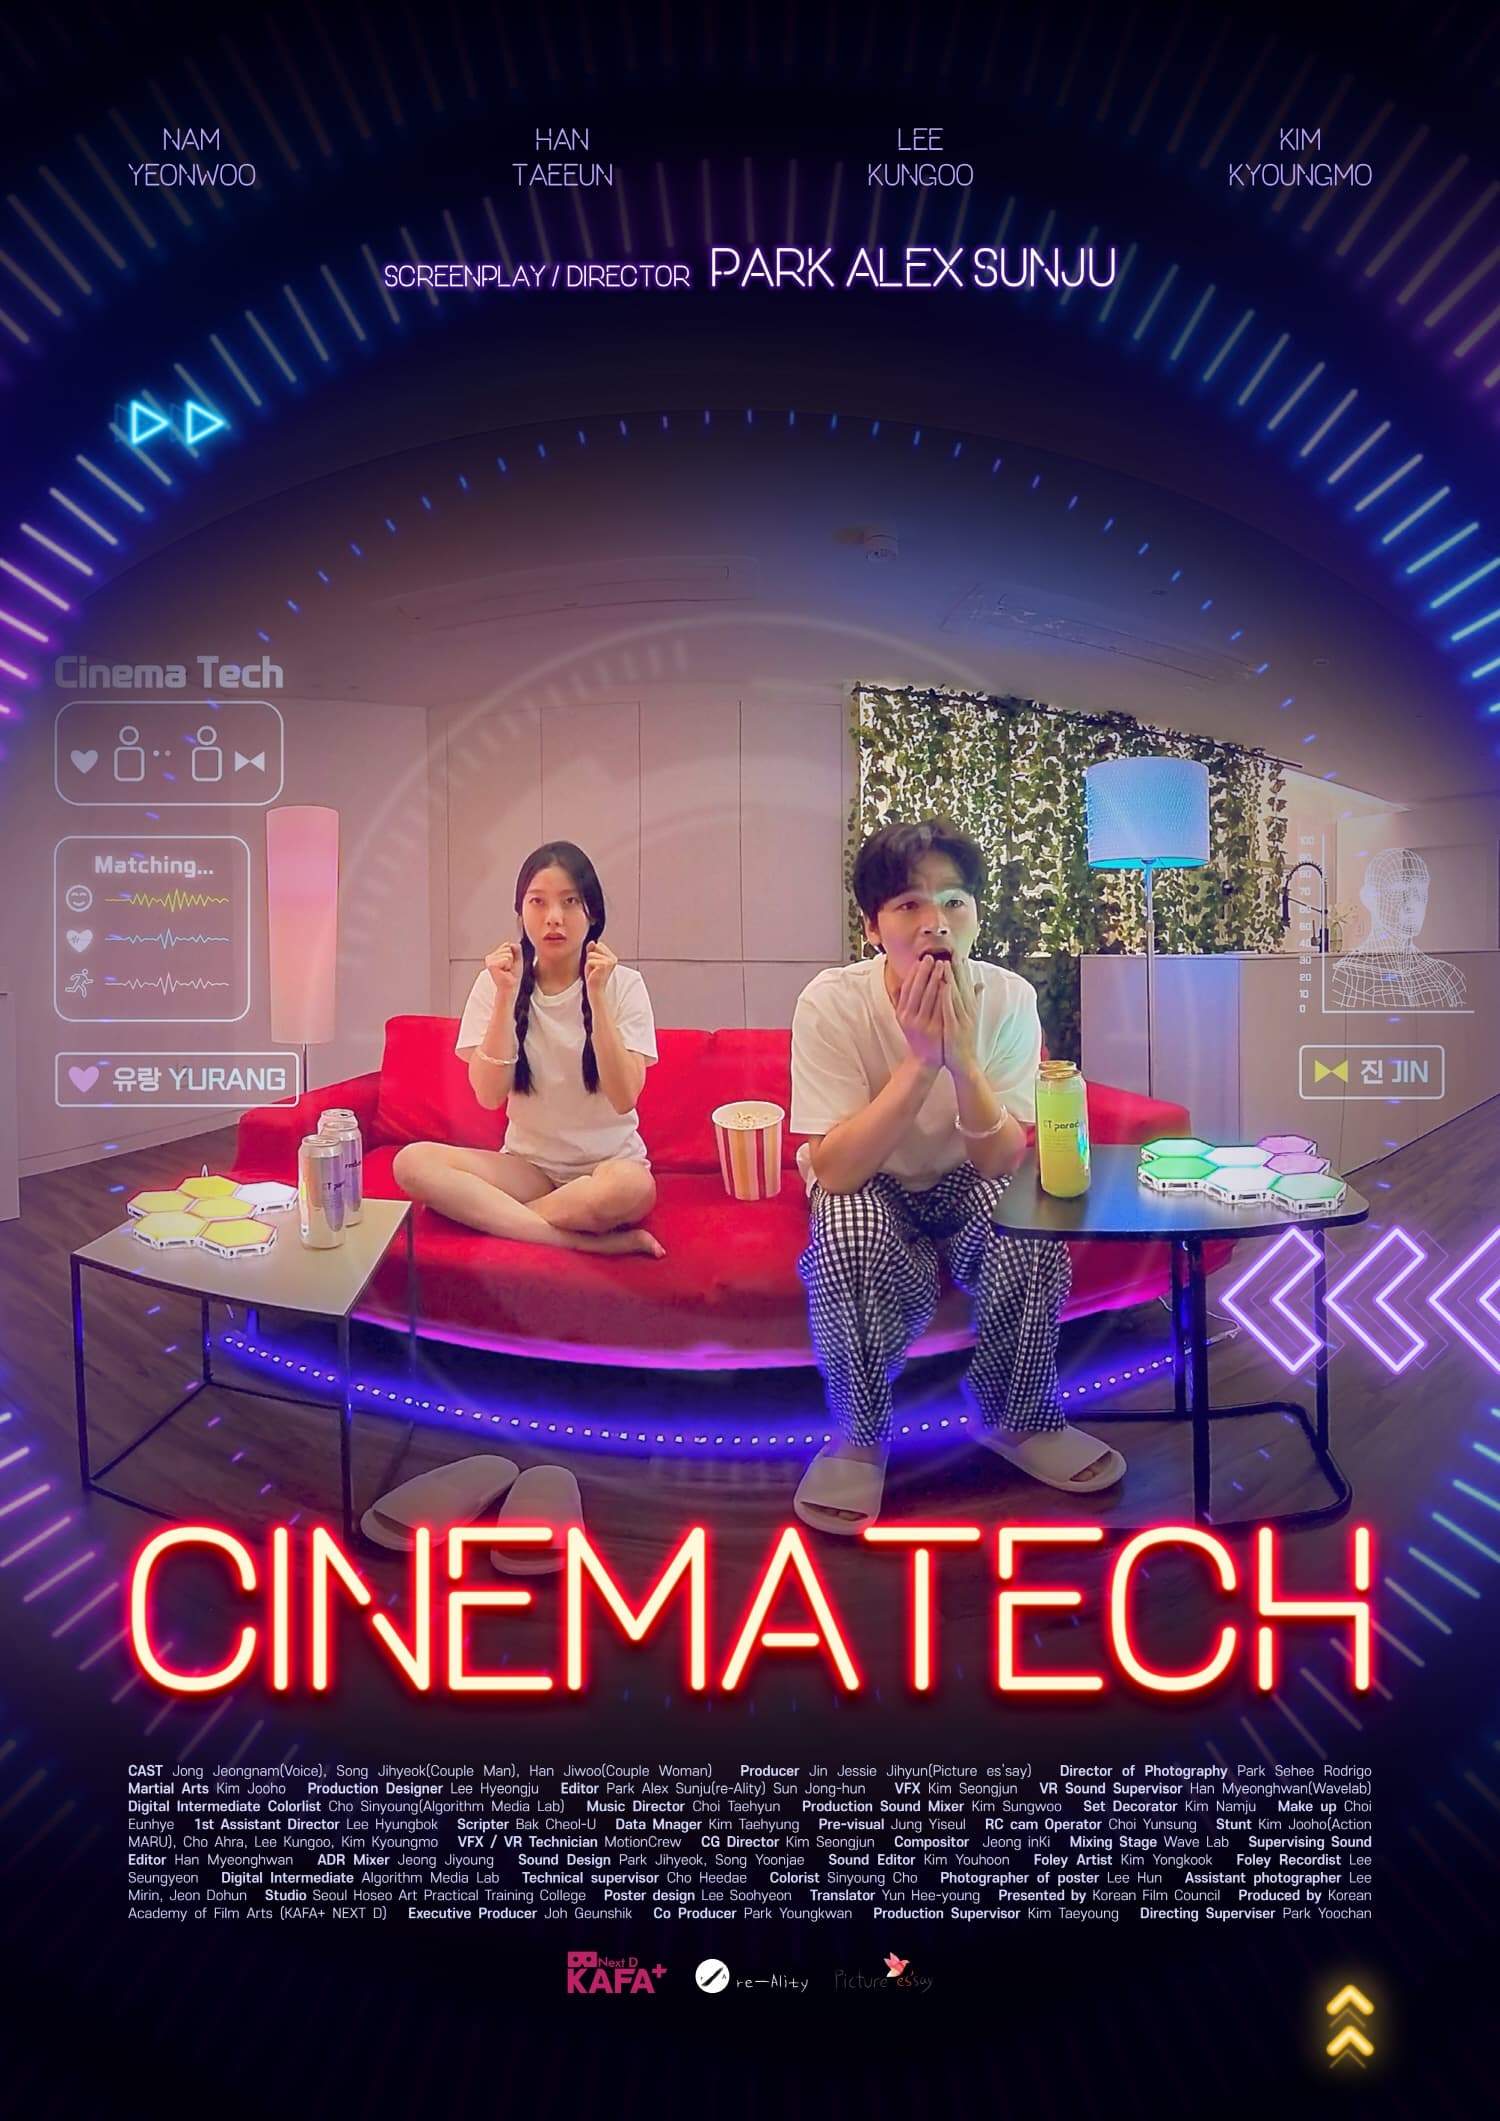 CinemaTech